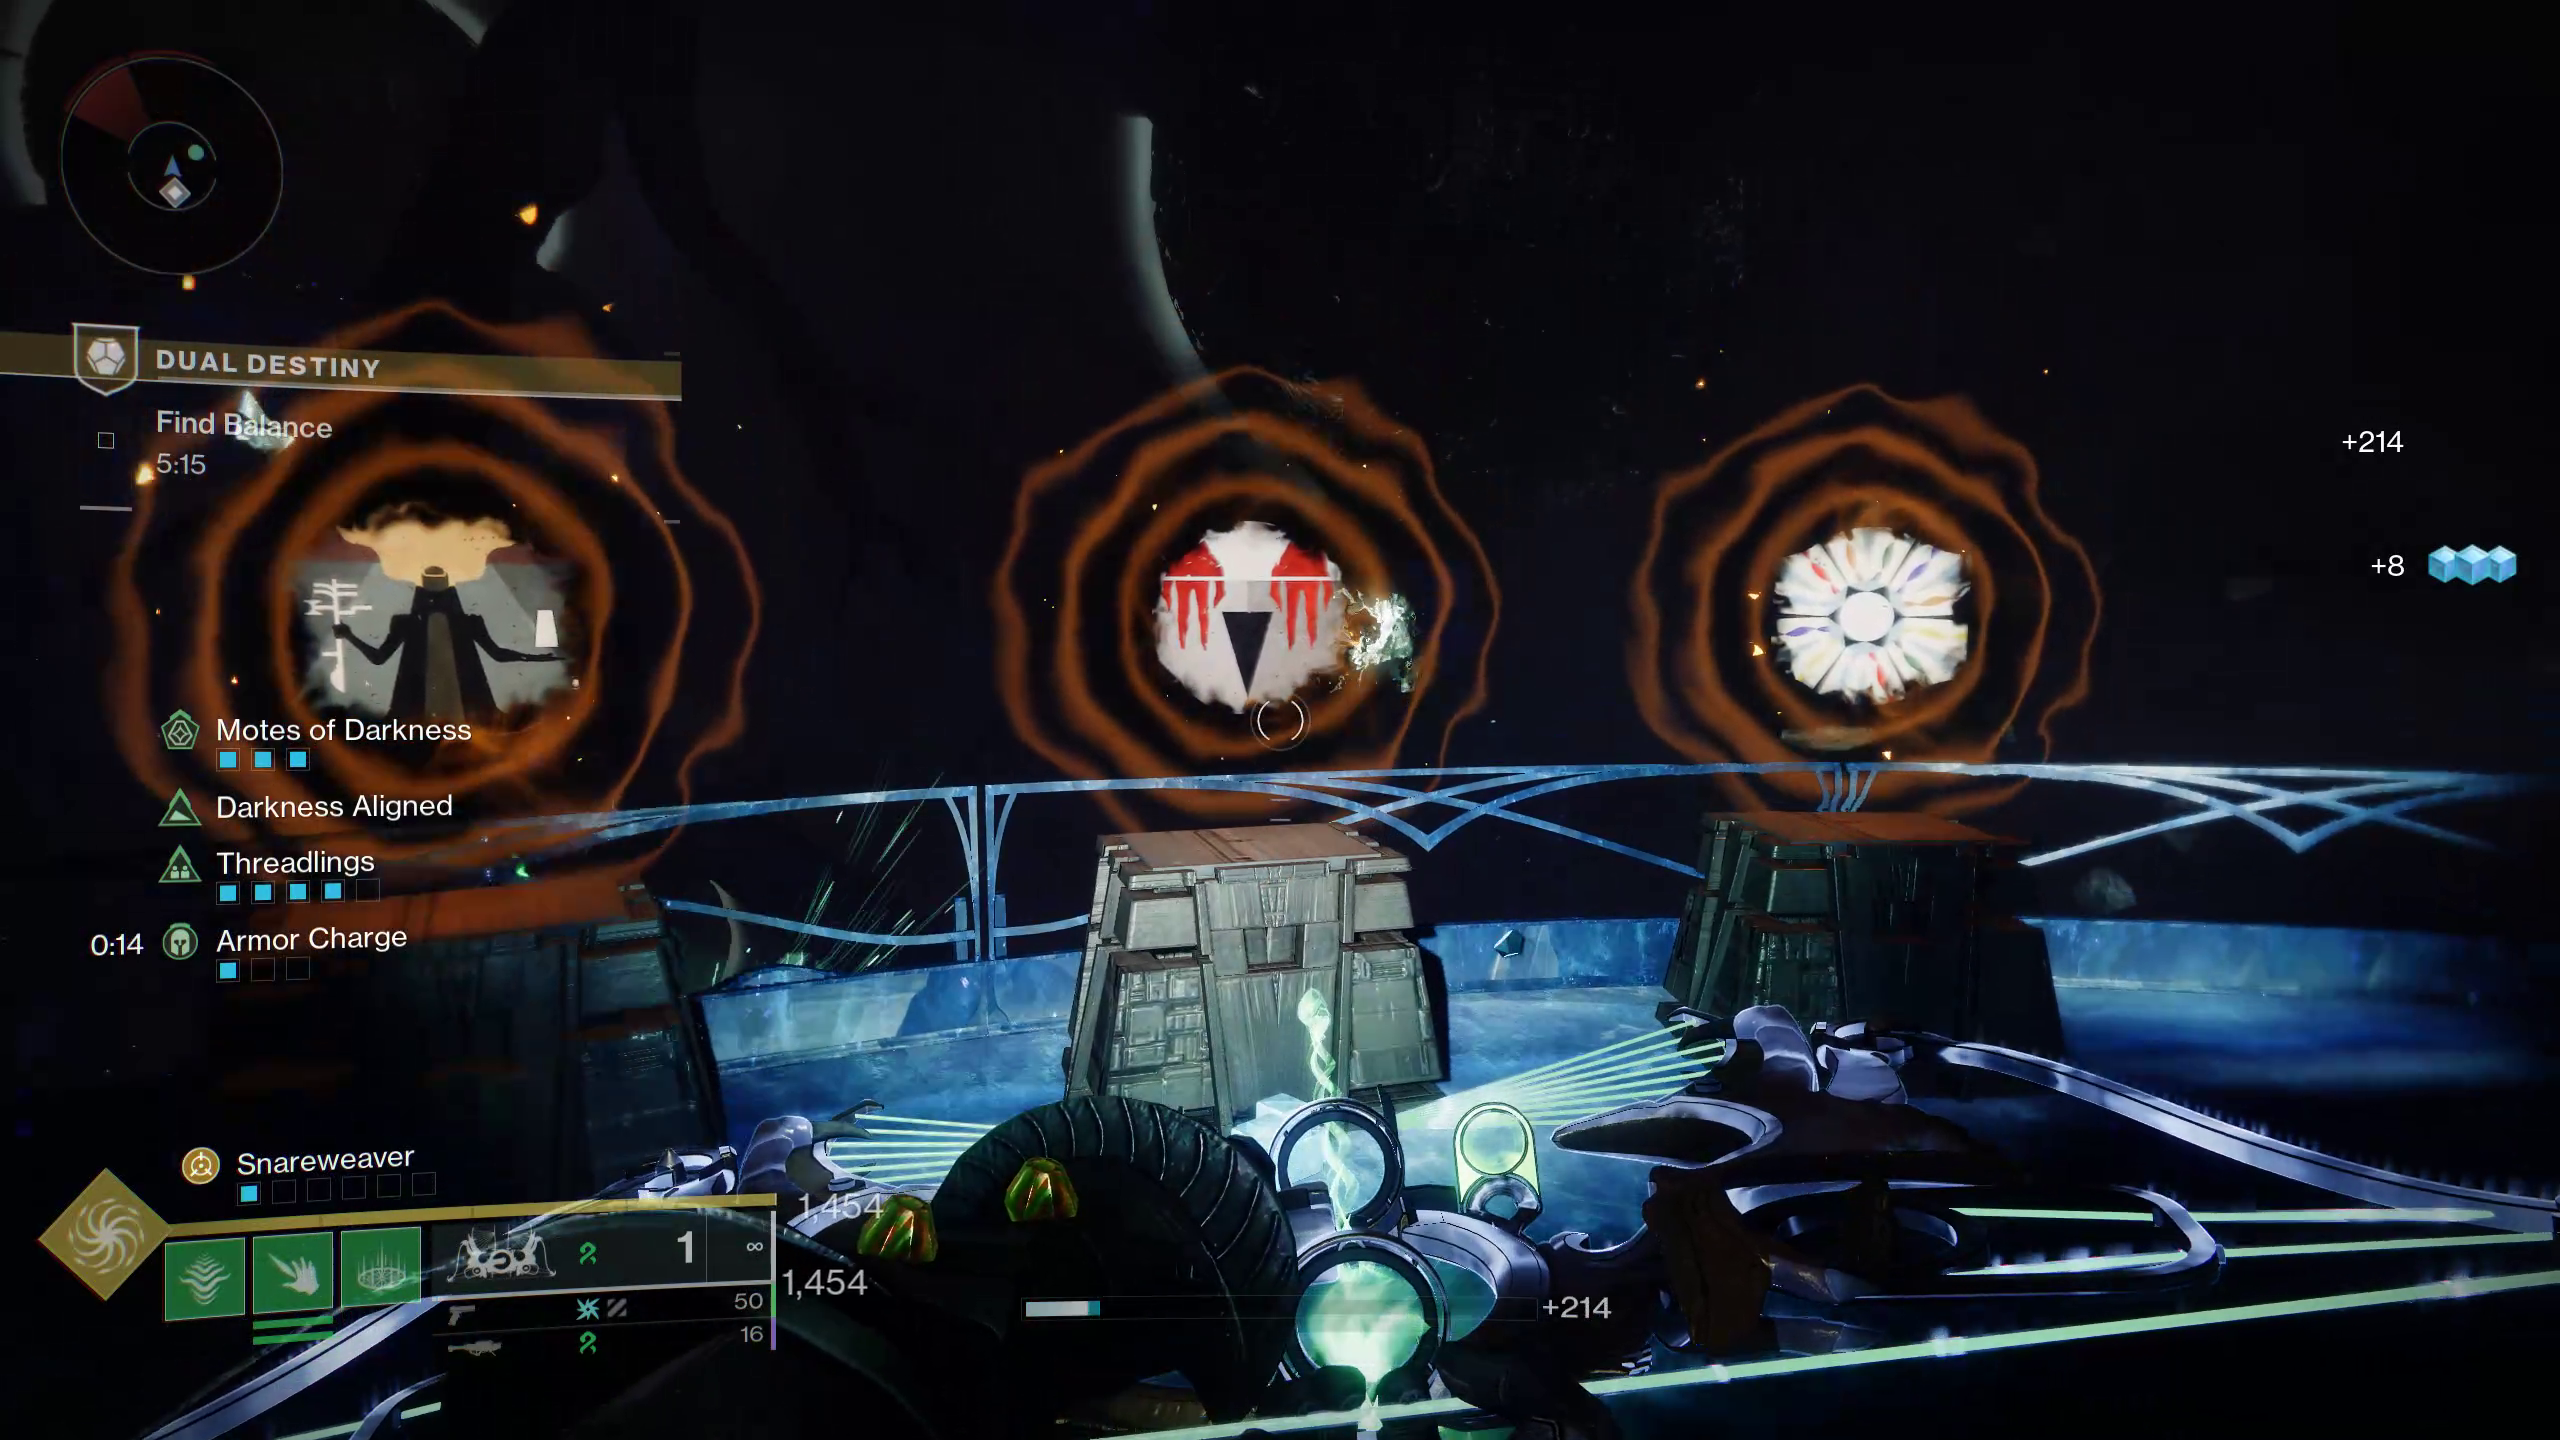 The Dual Destiny mission and its symbols.